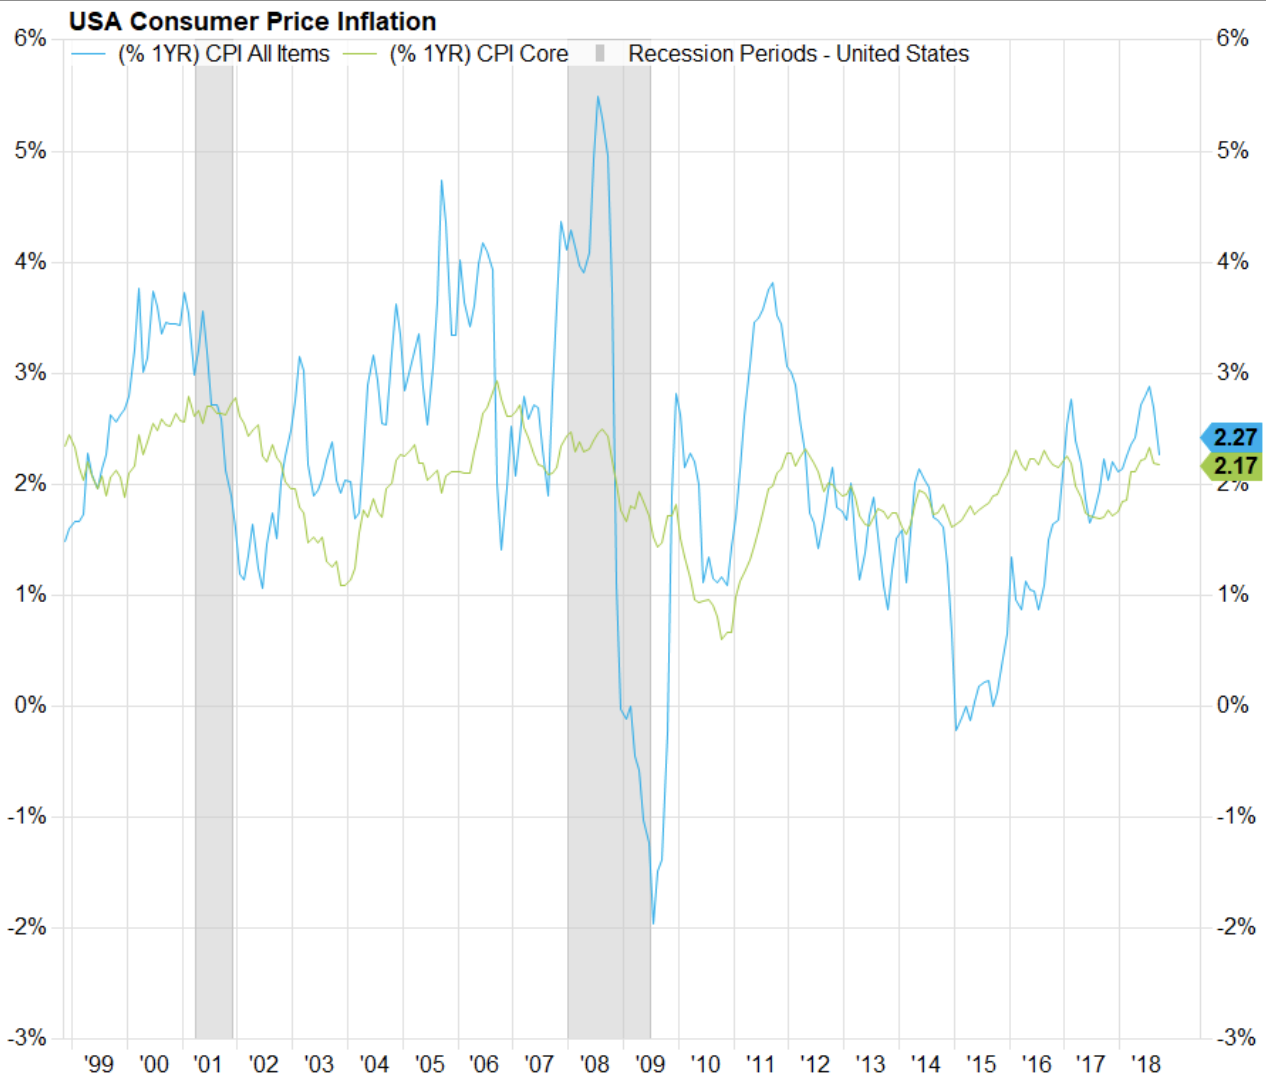 USA Consumer Price Inflation